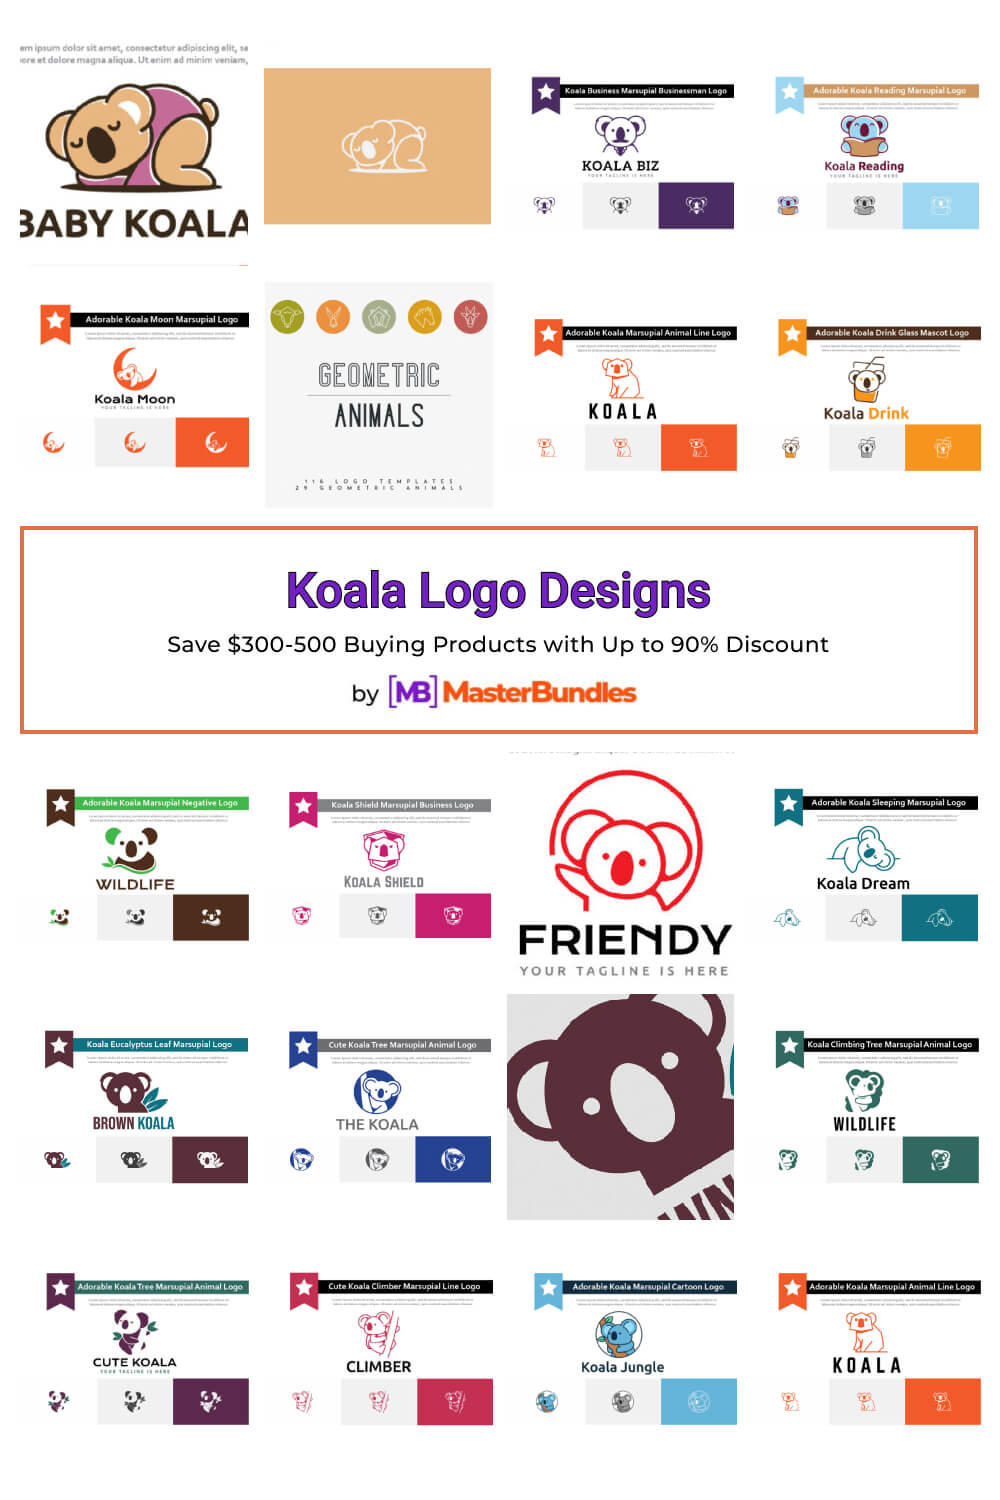 koala logo designs pinterest image.